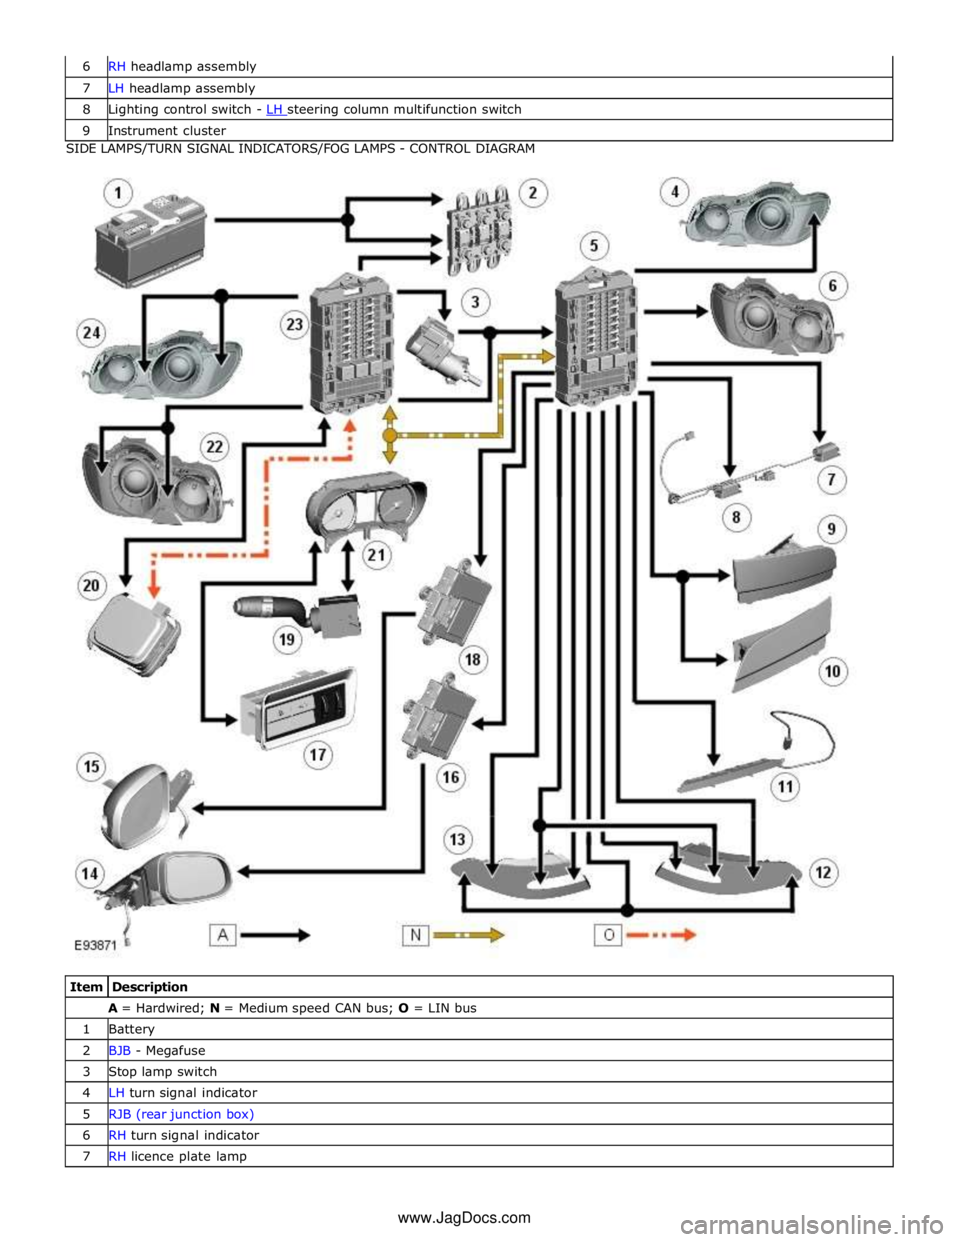 JAGUAR XFR 2010 1.G Workshop Manual 7 LH headlamp assembly 8 Lighting control switch - LH steering column multifunction switch 9 Instrument cluster SIDE LAMPS/TURN SIGNAL INDICATORS/FOG LAMPS - CONTROL DIAGRAM 
 
 
 
Item Description A 